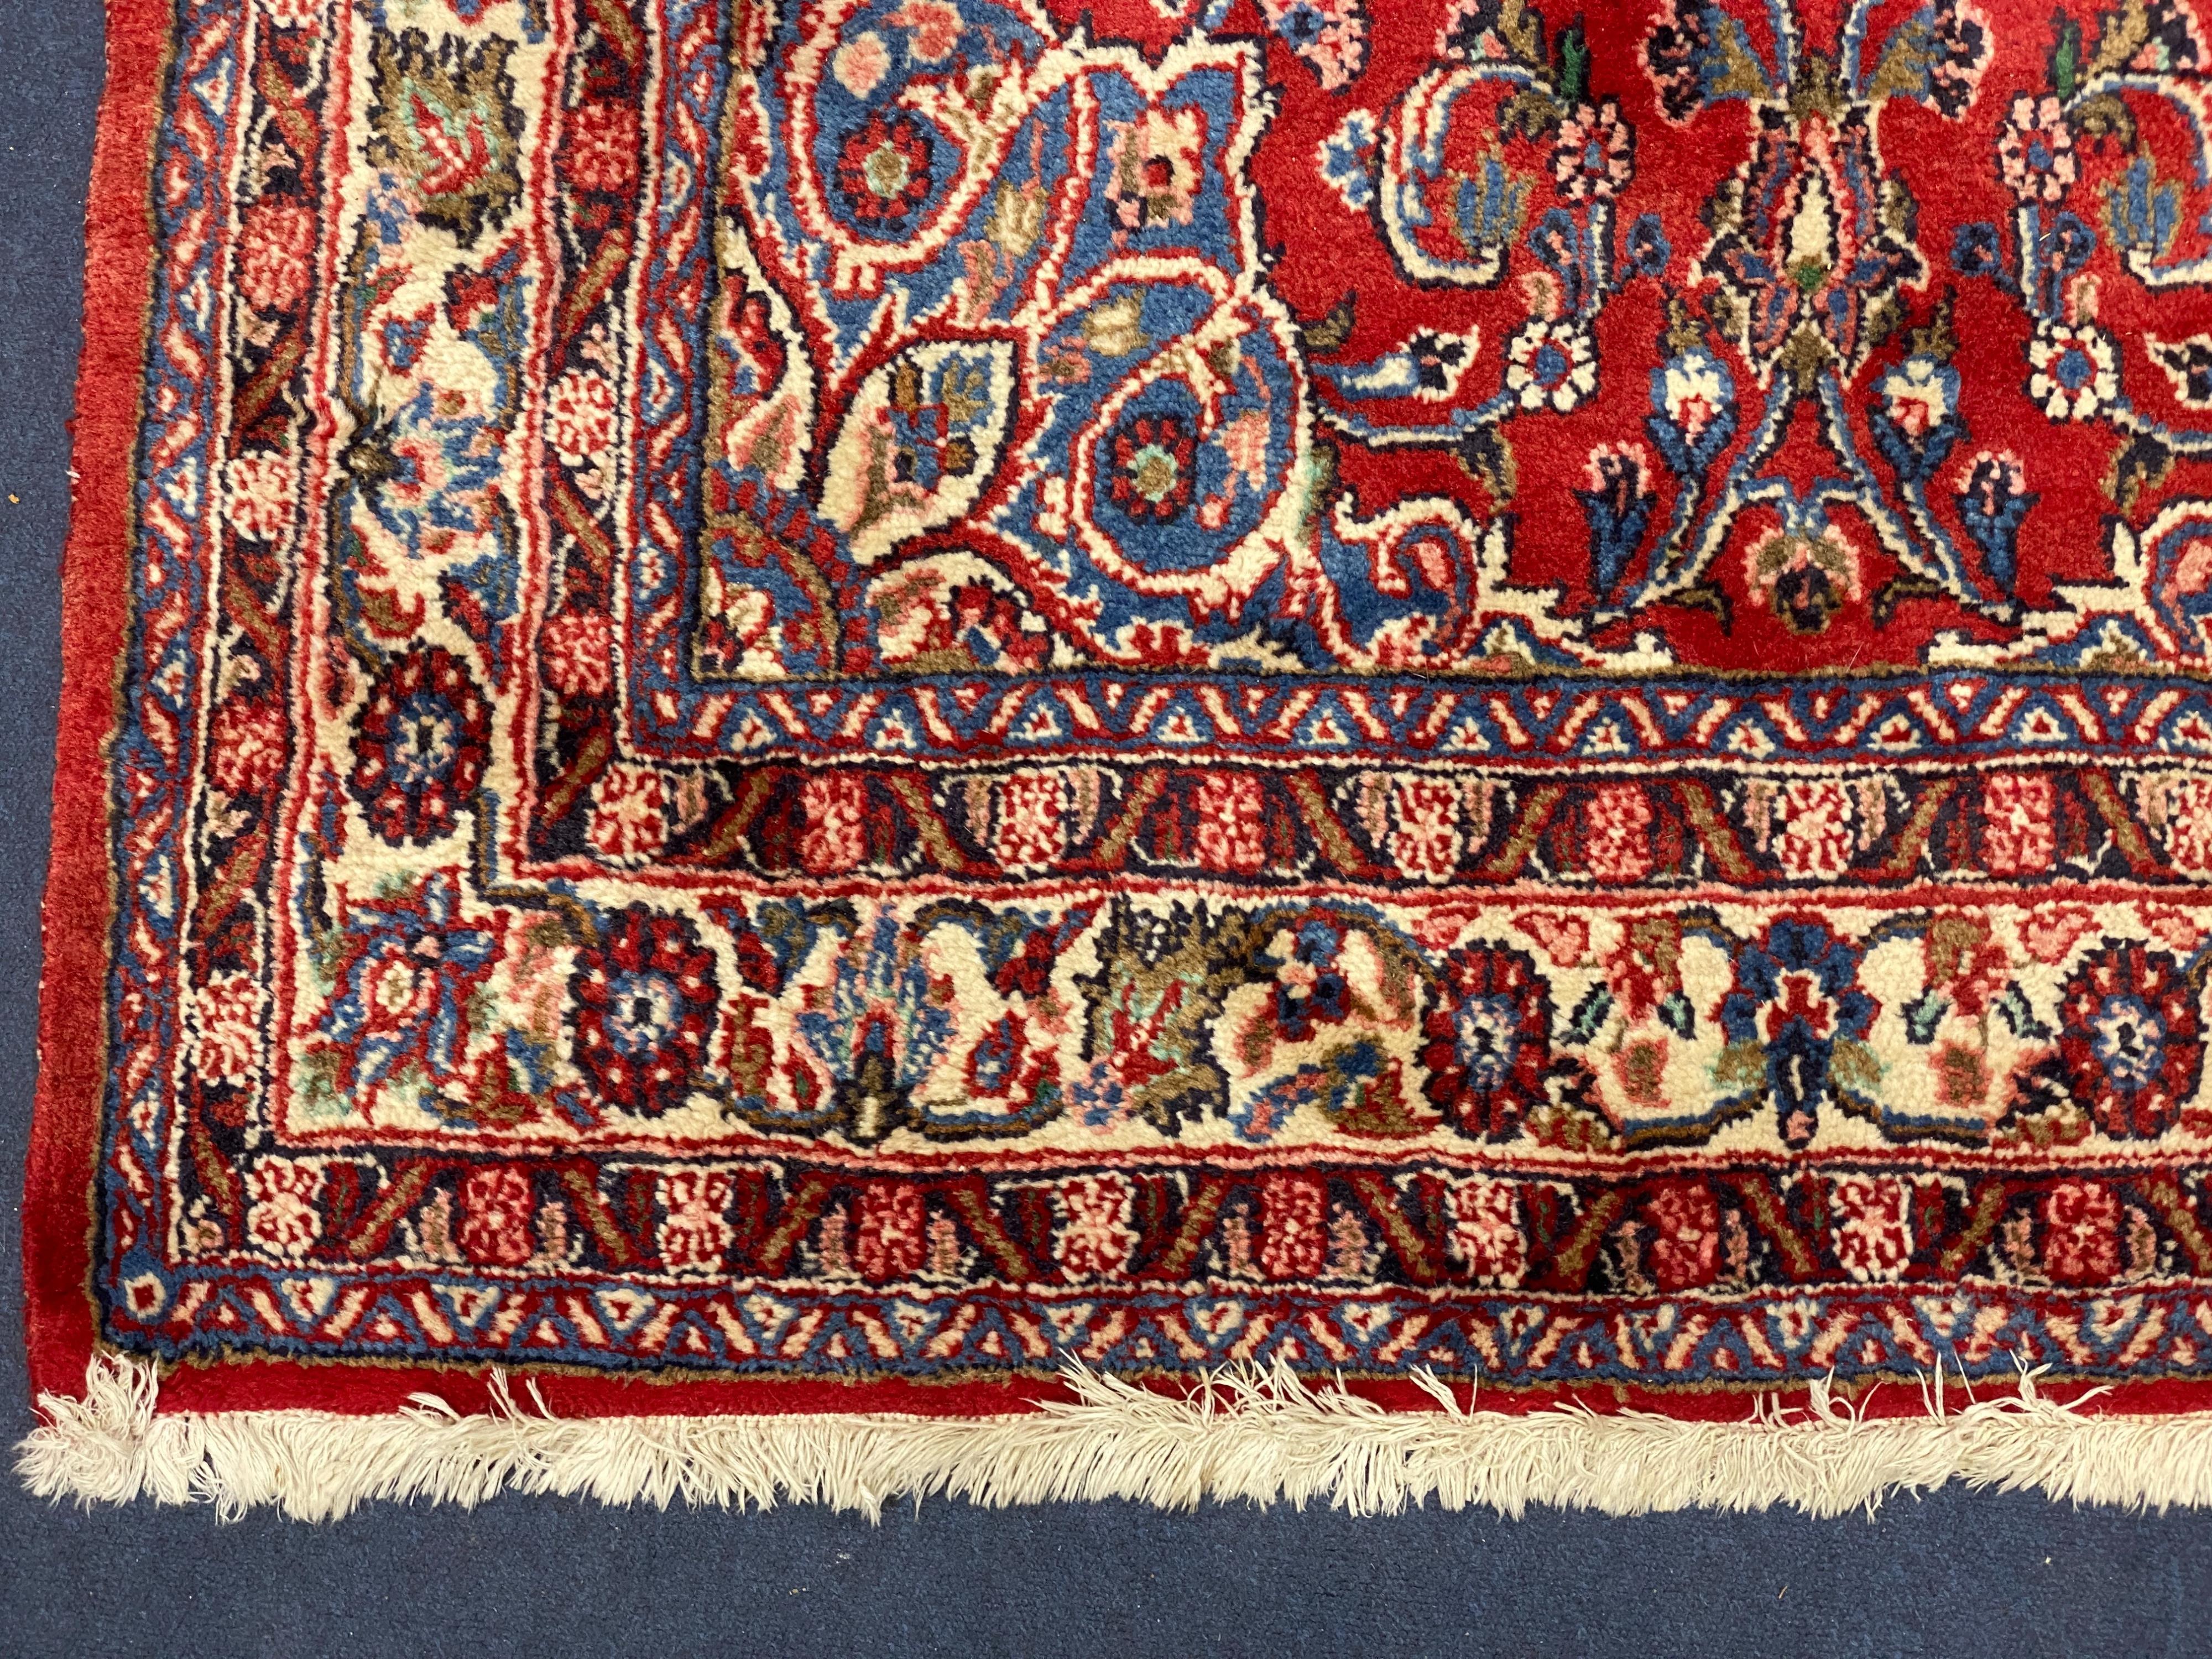 A Northwest Persian red ground rug, 240 cm x 136 cm